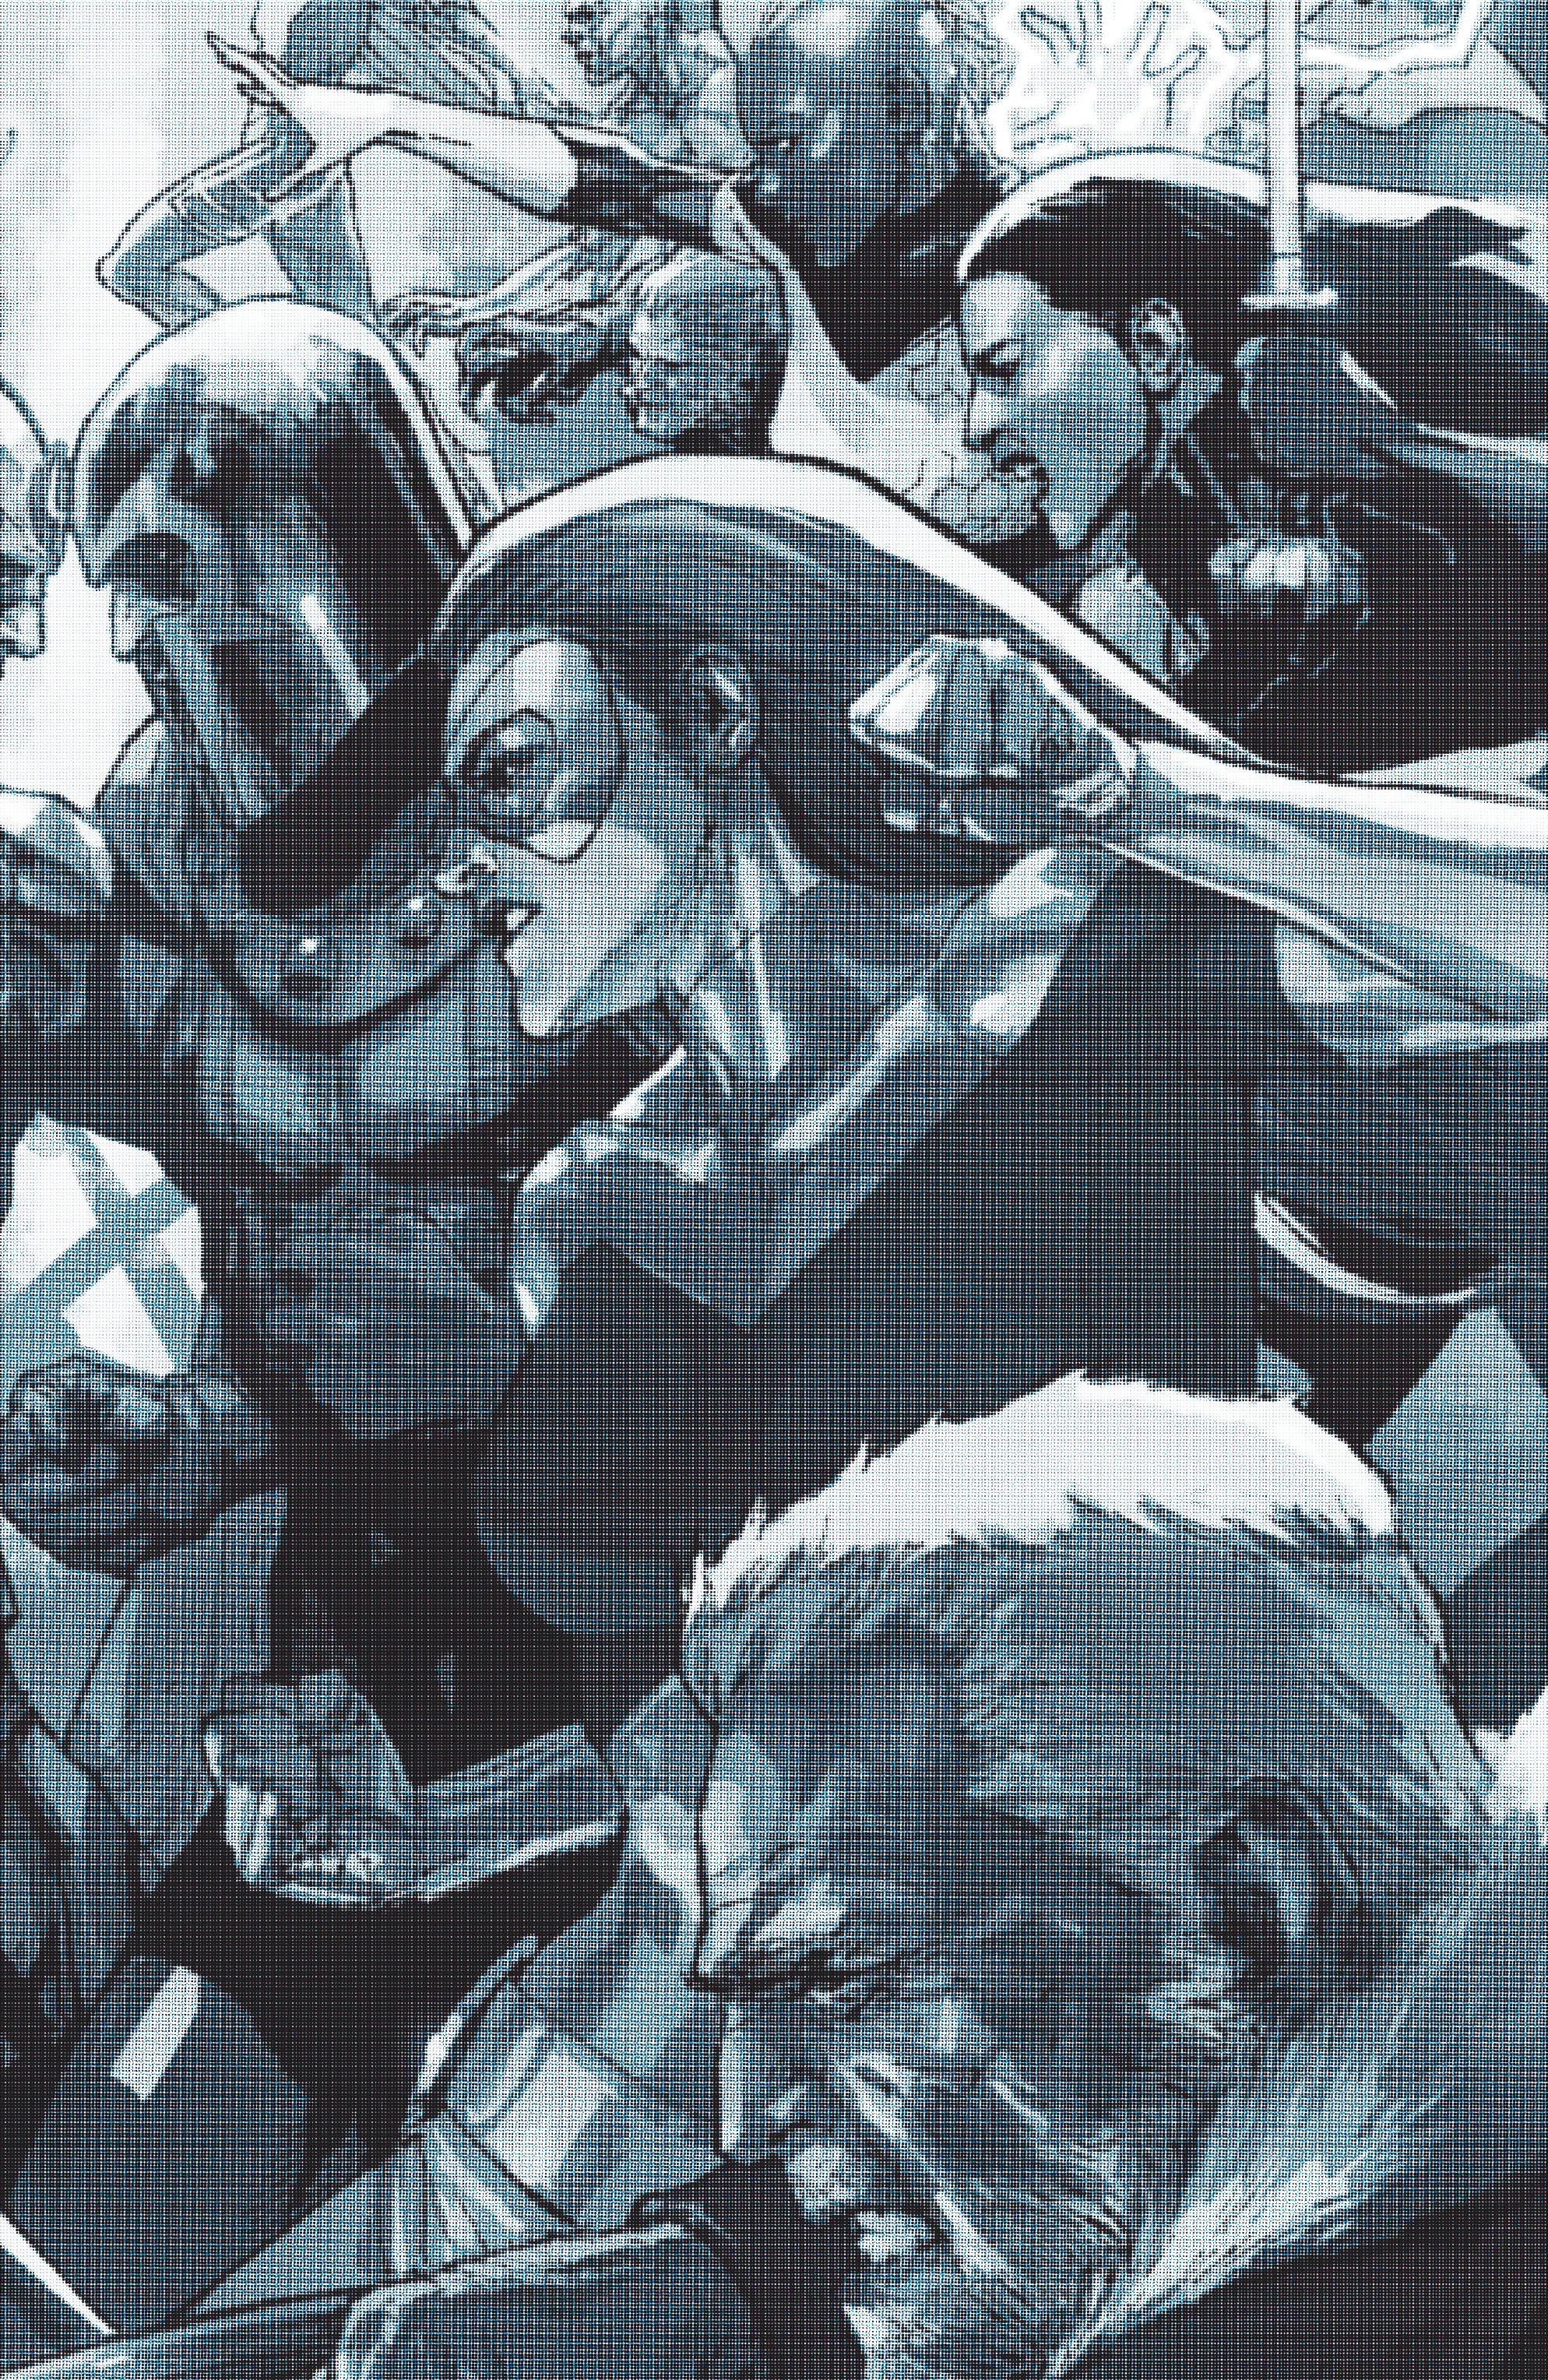 Inhumans vs X-Men (2016-): Chapter 1 - Page 3